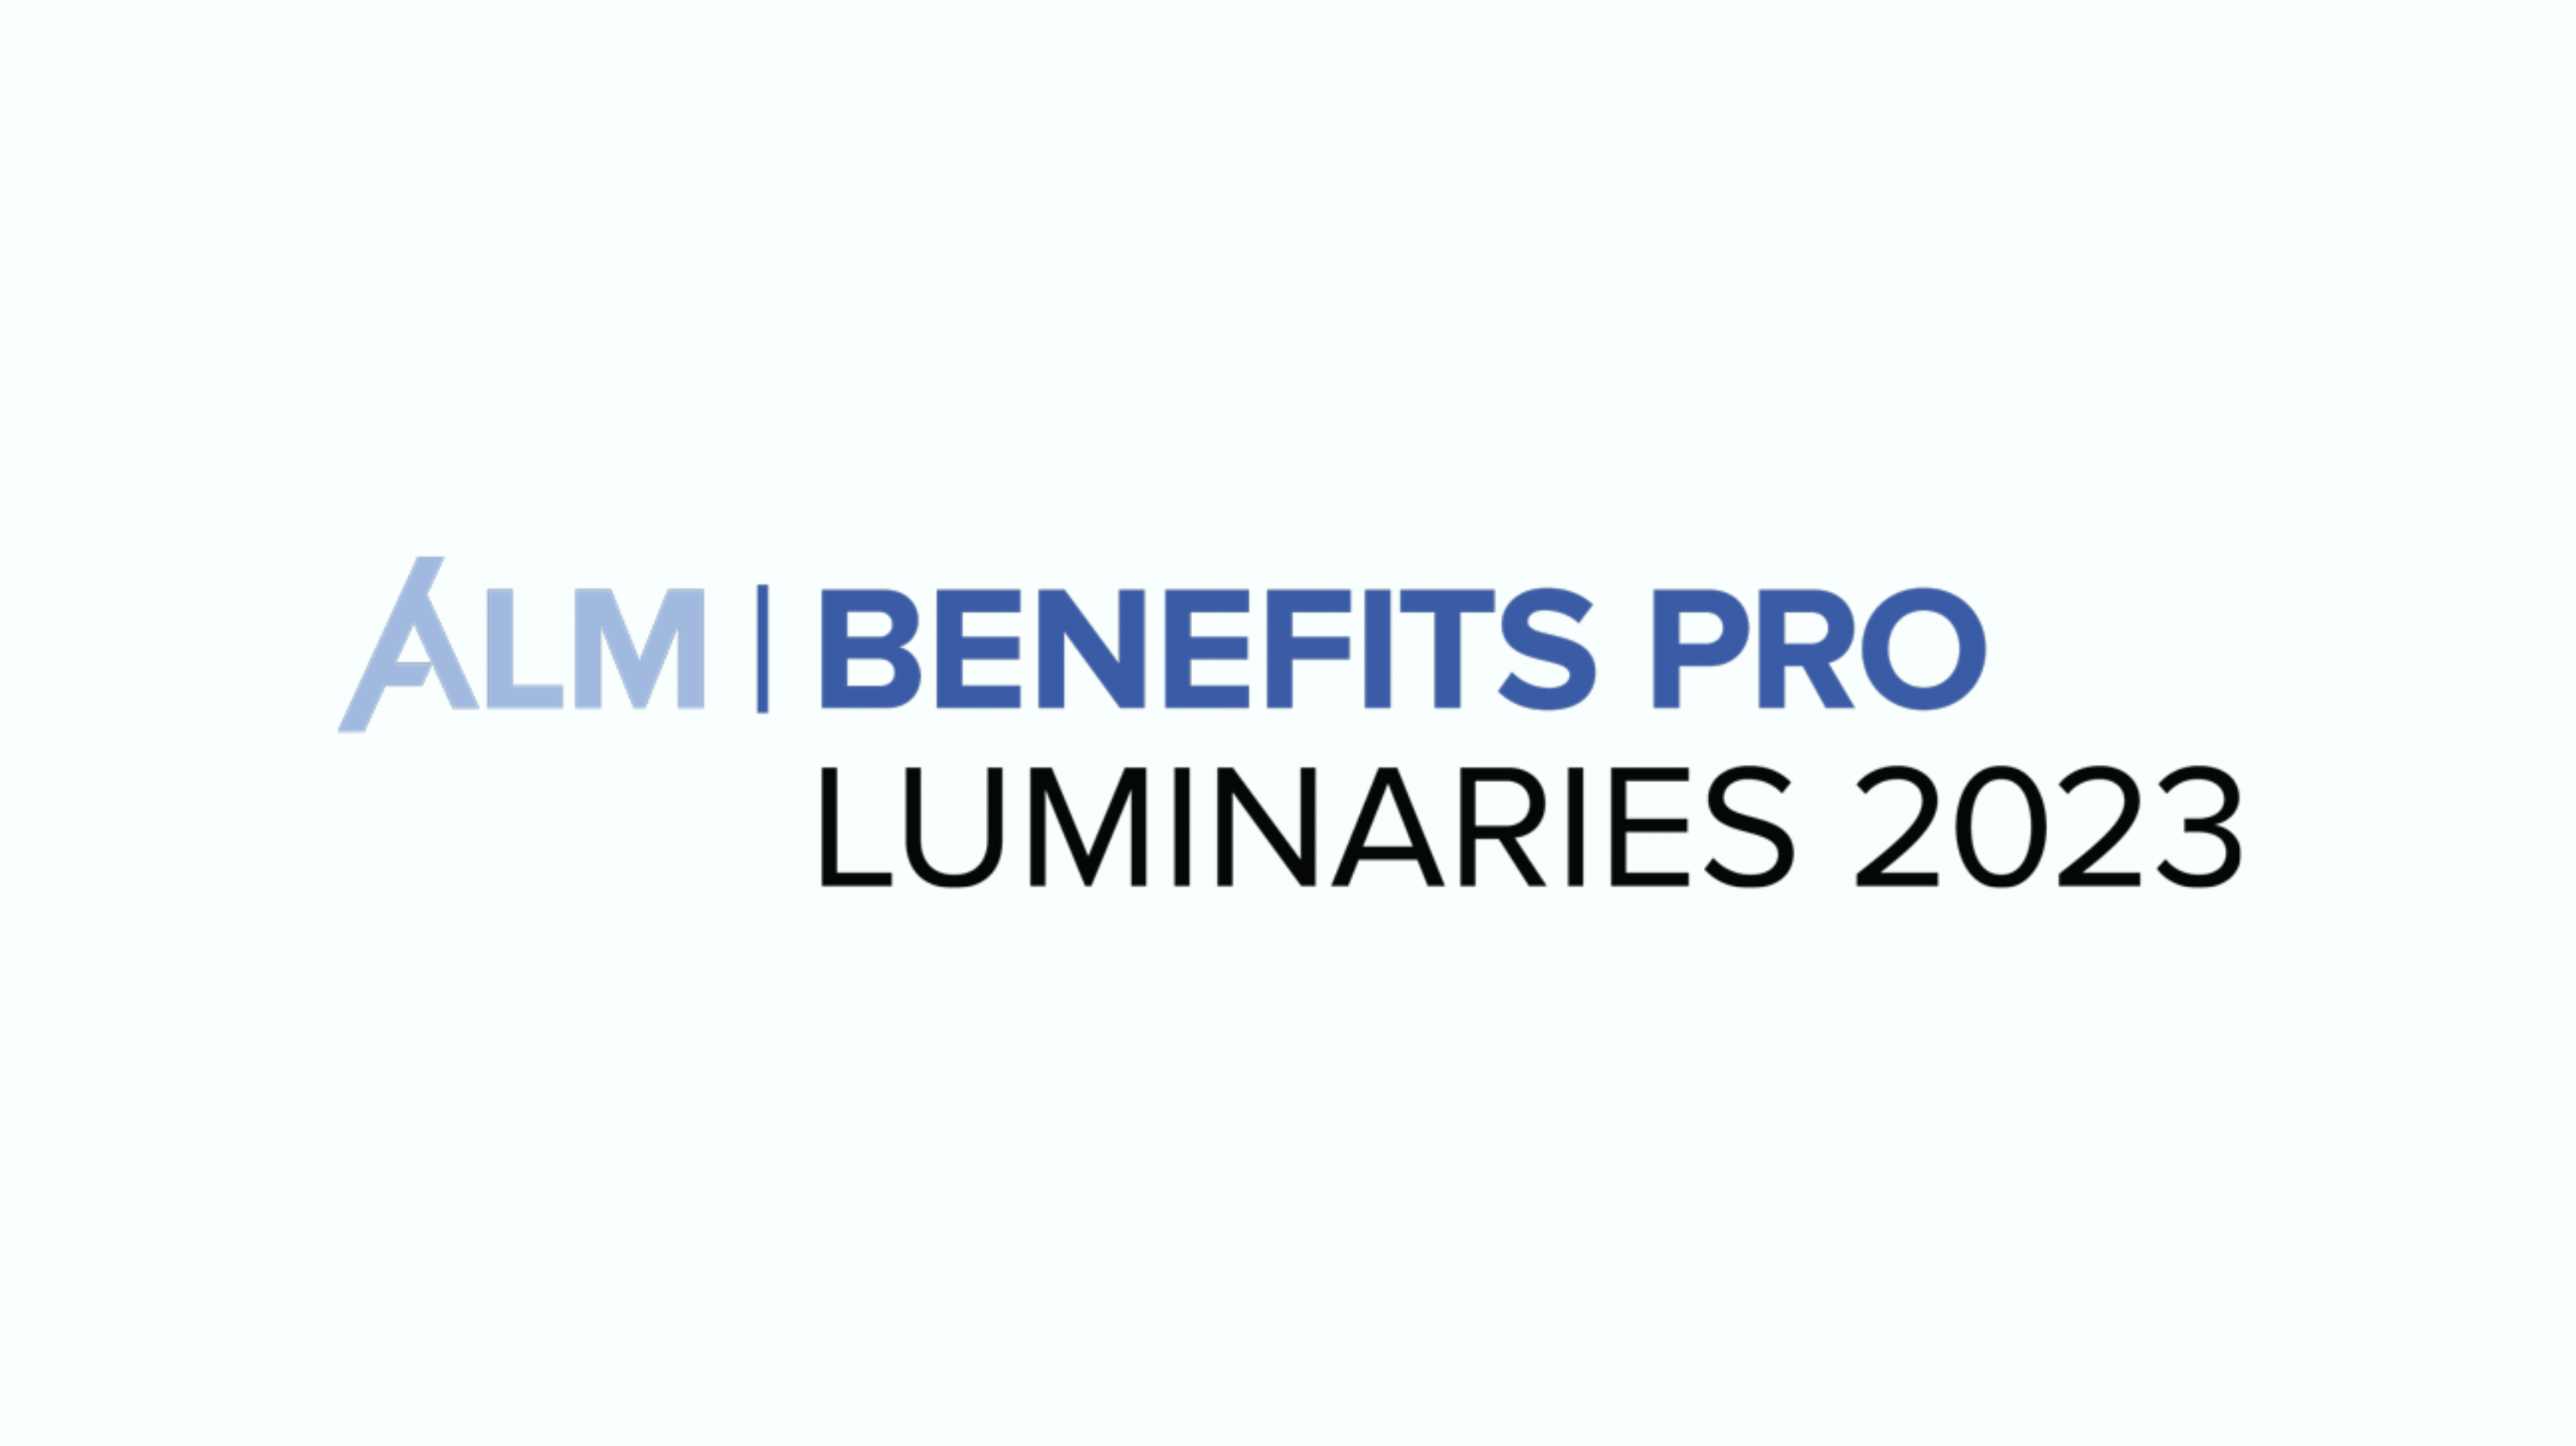 BenefitsPRO Luminaries 2023 awards LearnLux